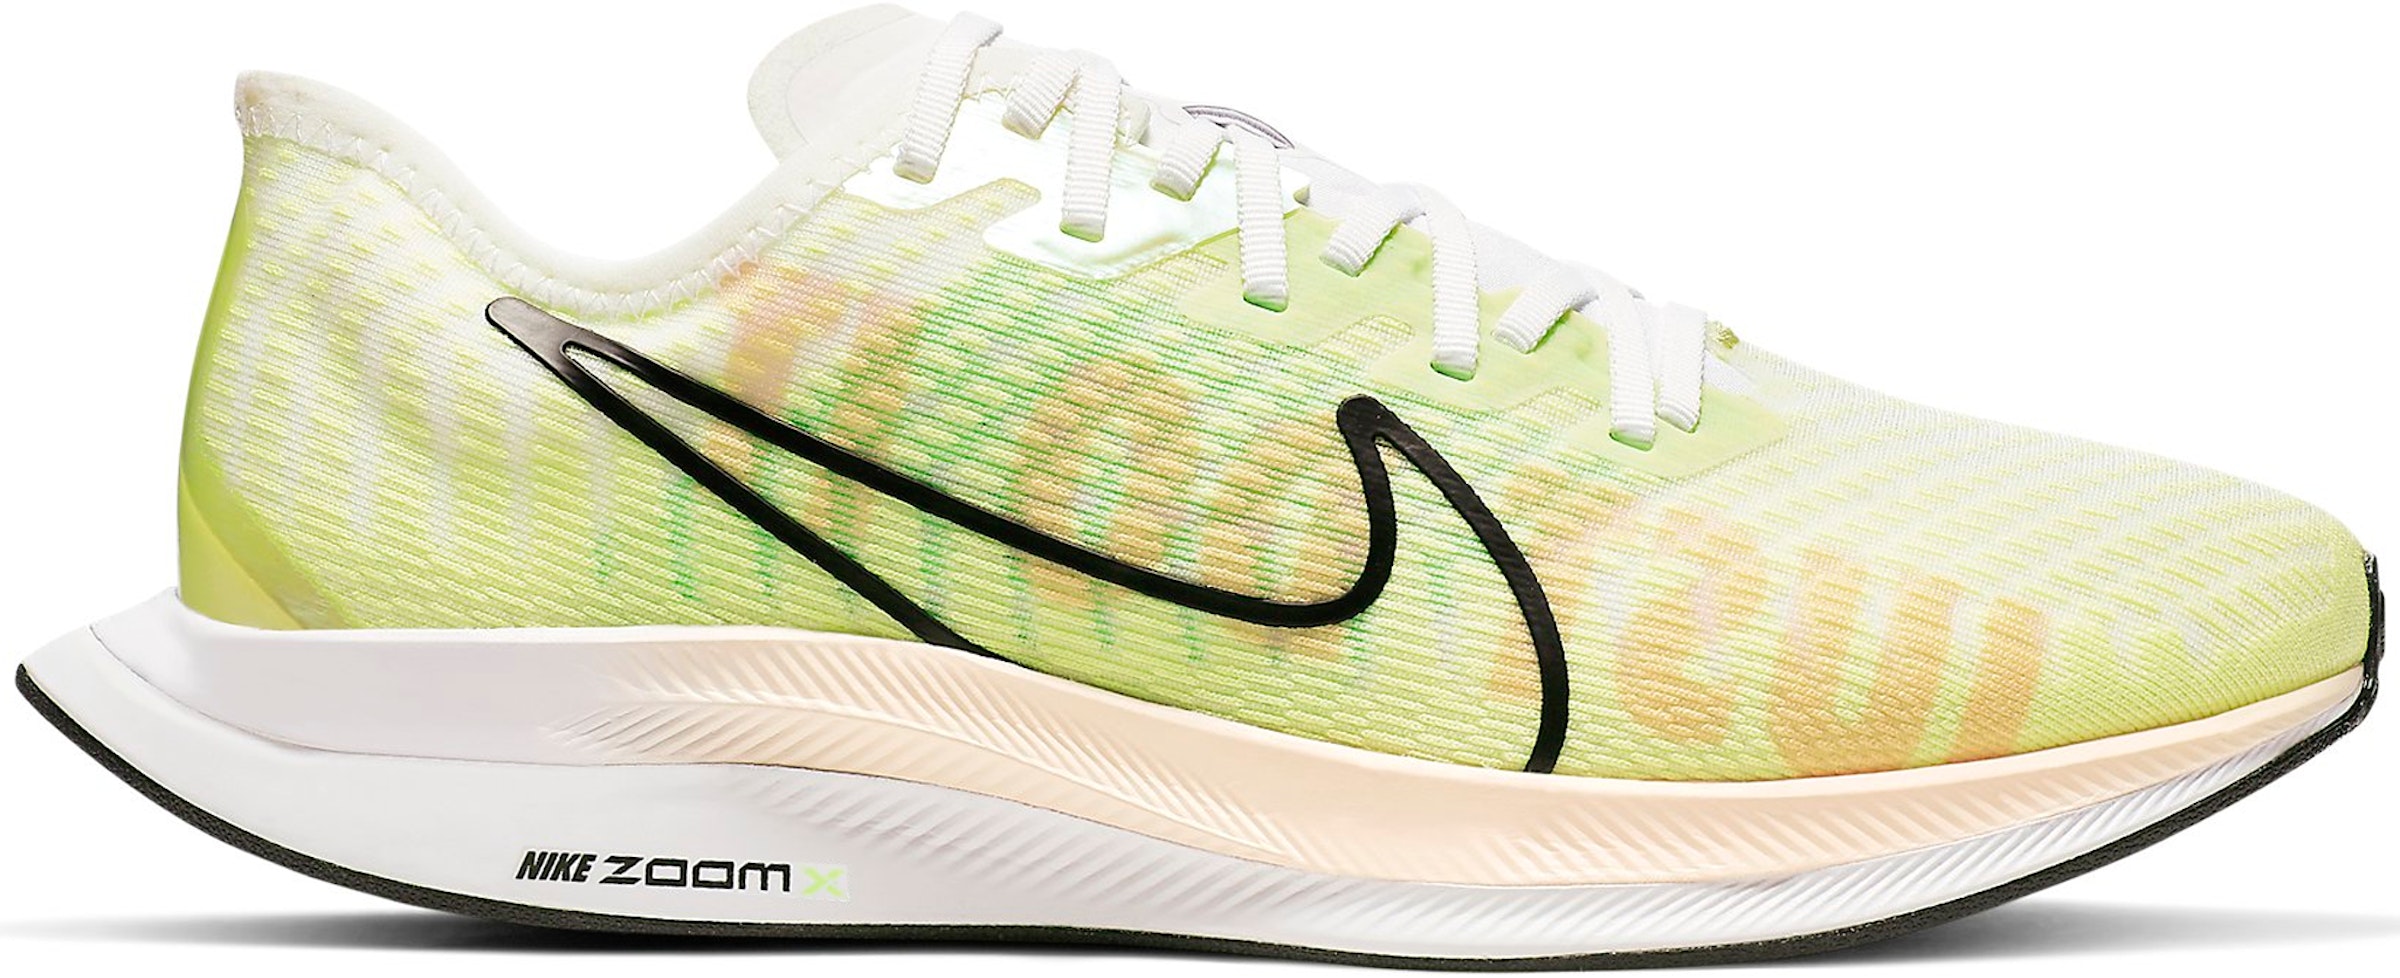 Nike Zoom 2 Fenom Green (Women's) - BV1134-300 - US